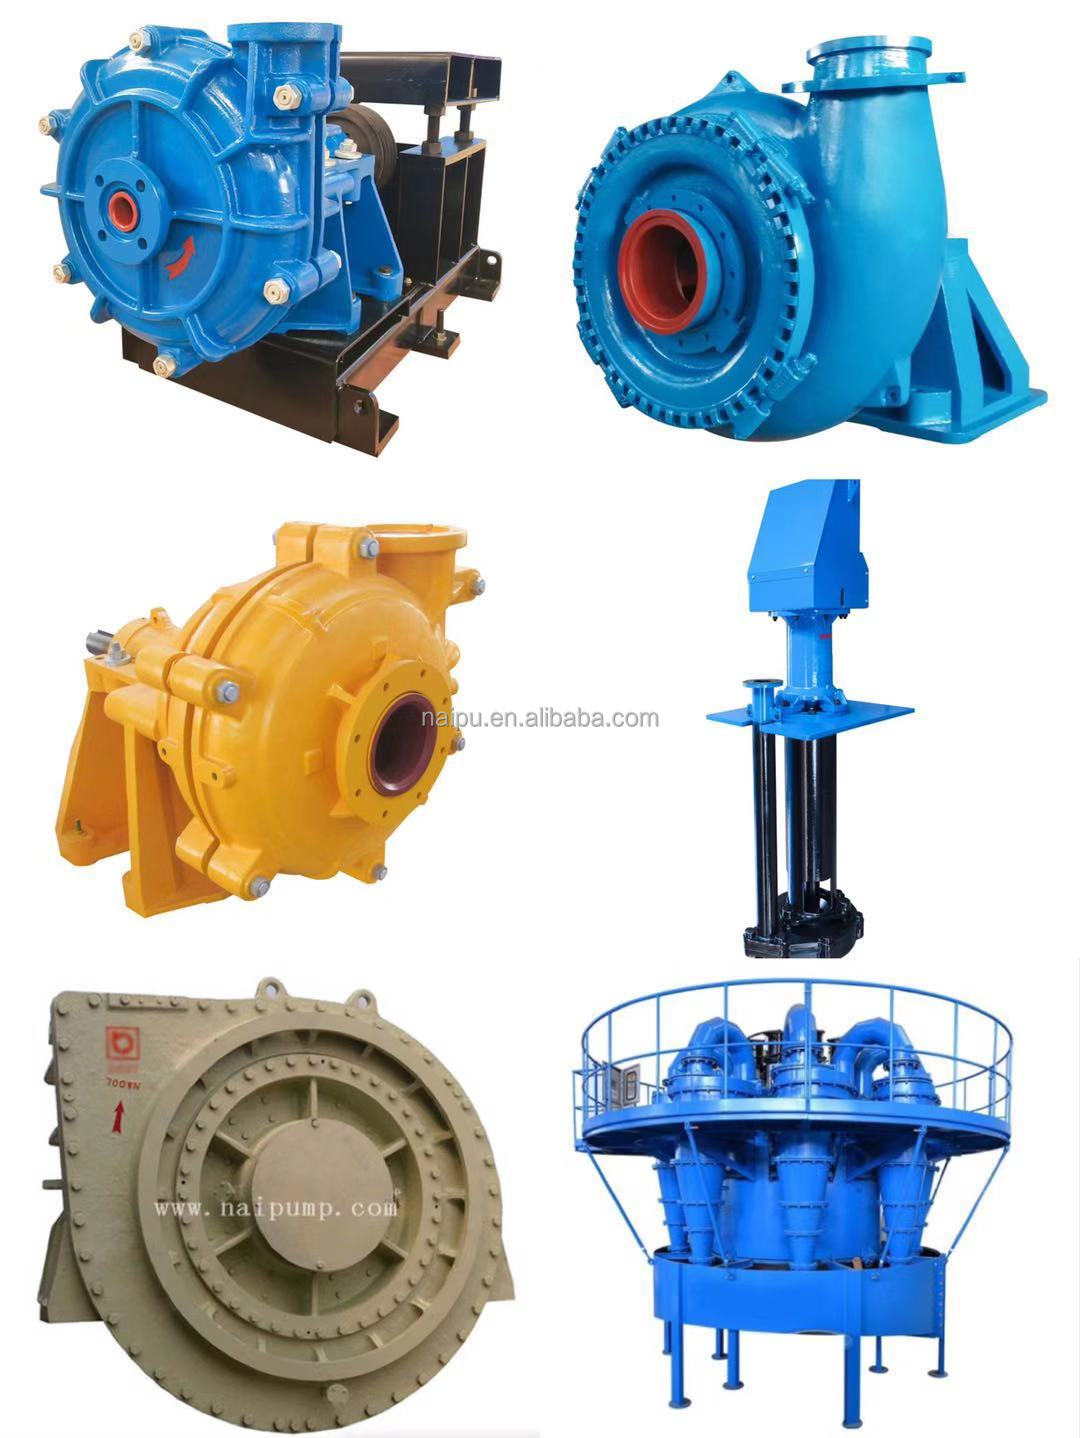 Slime sump pumps centrifugal mining vertical slurry pump different with parker hydraulic pump,vacuum pump